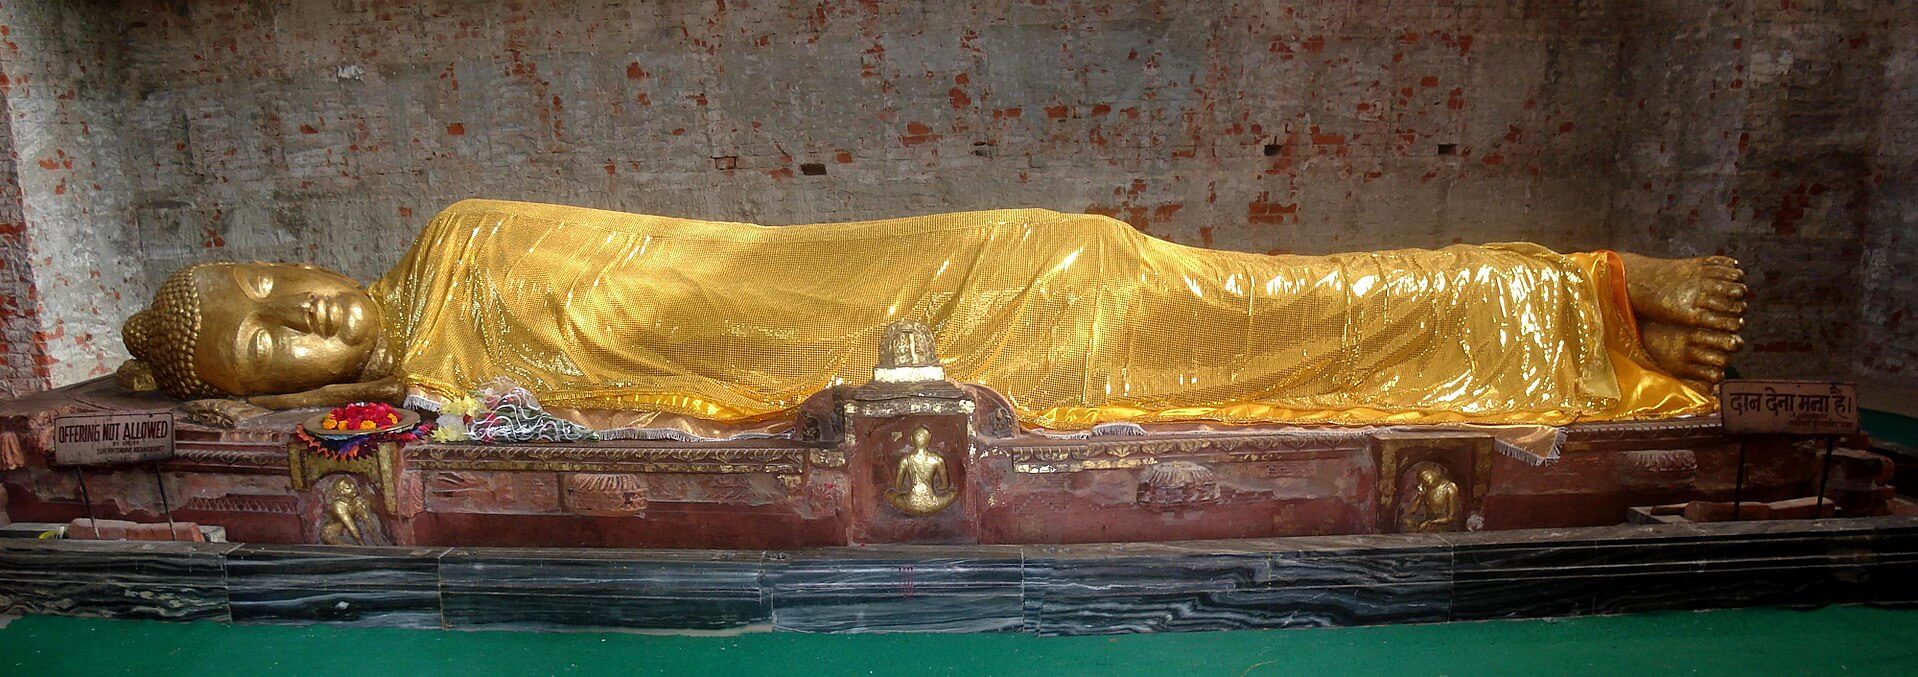 Gautama Buddha's statue in Parinirvana, at the Mahaparinirvana Temple